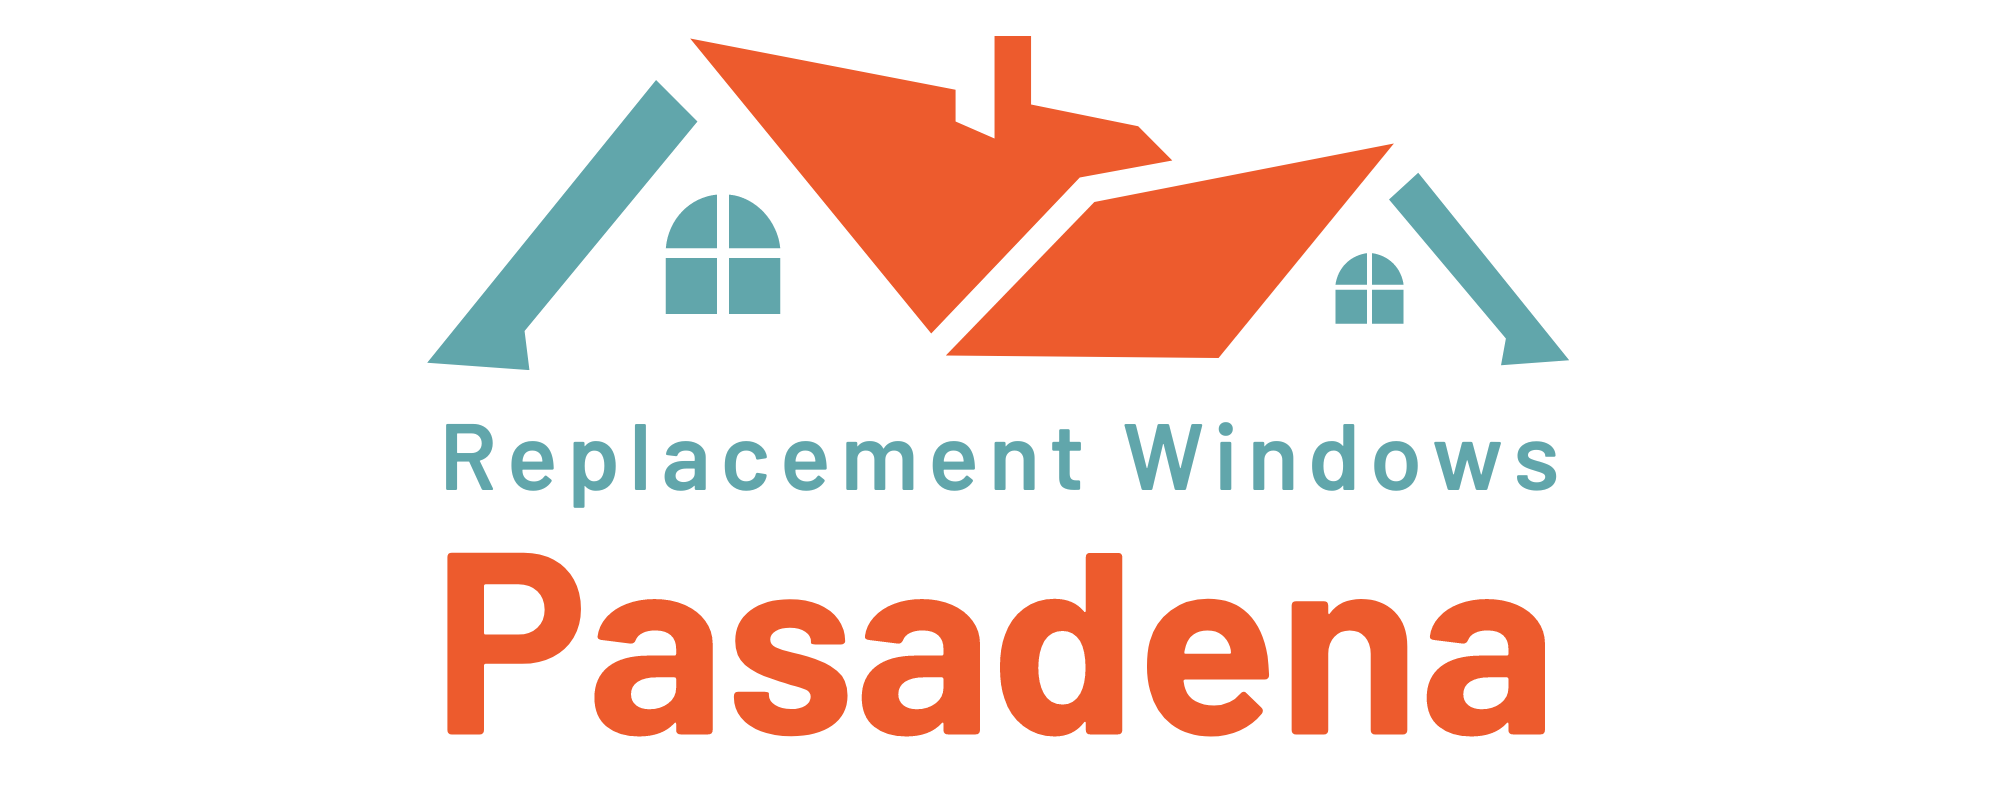 5 Types of Window Replacement - Replacement Windows Pasadena